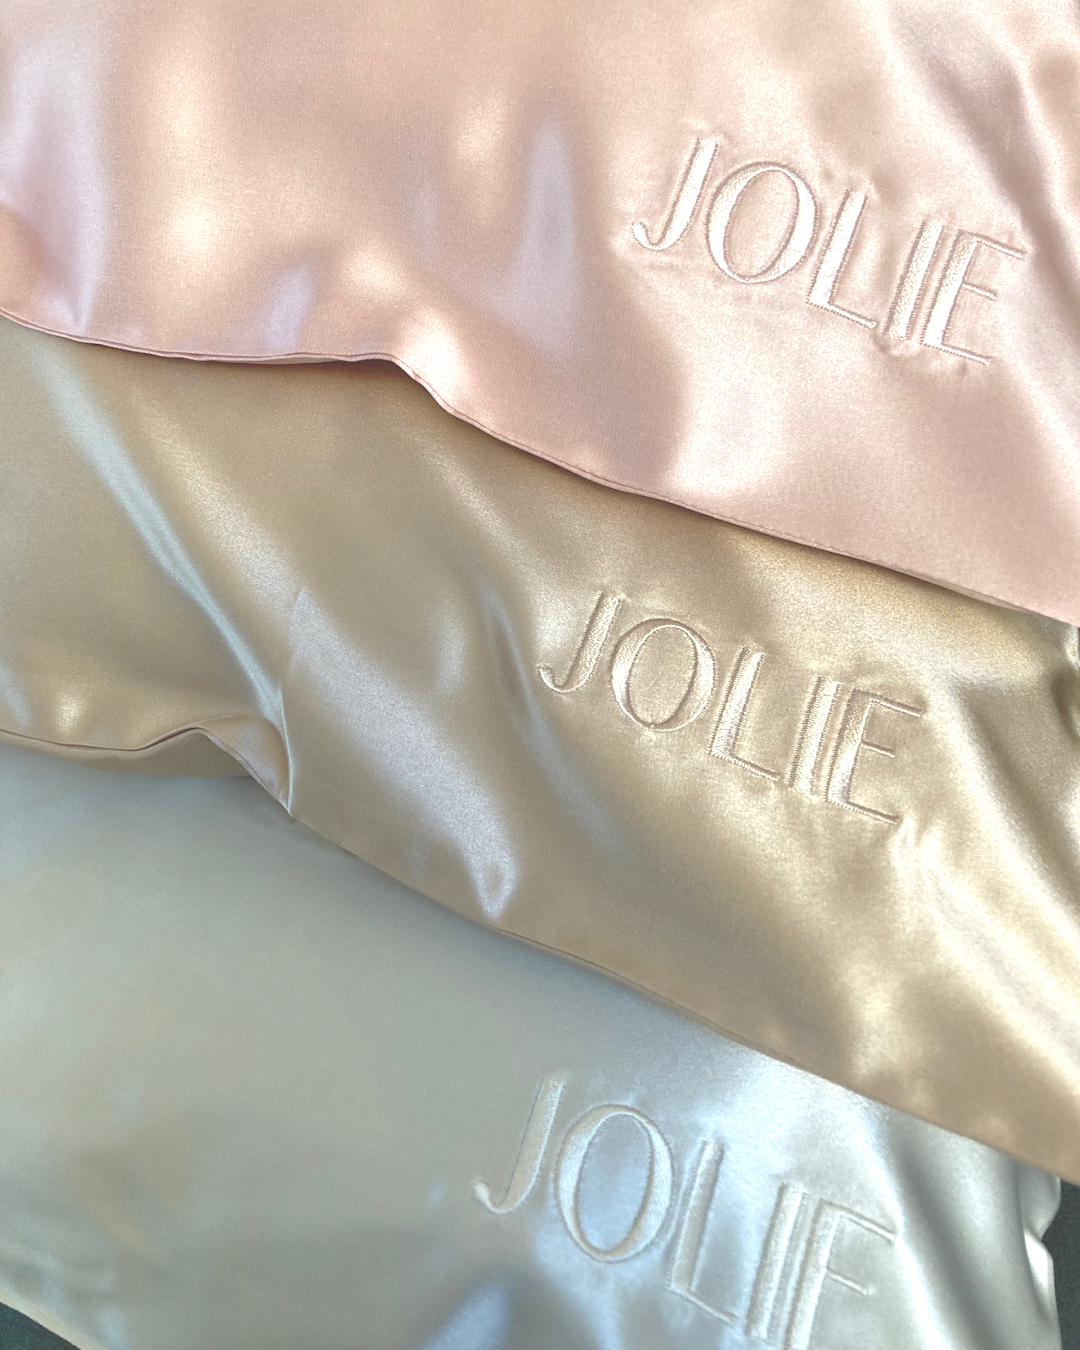 Mulberry silk pillowcase 22 momme dream silk pillowcase by Jolie silk ivory white pink gold champagne beauty sleep